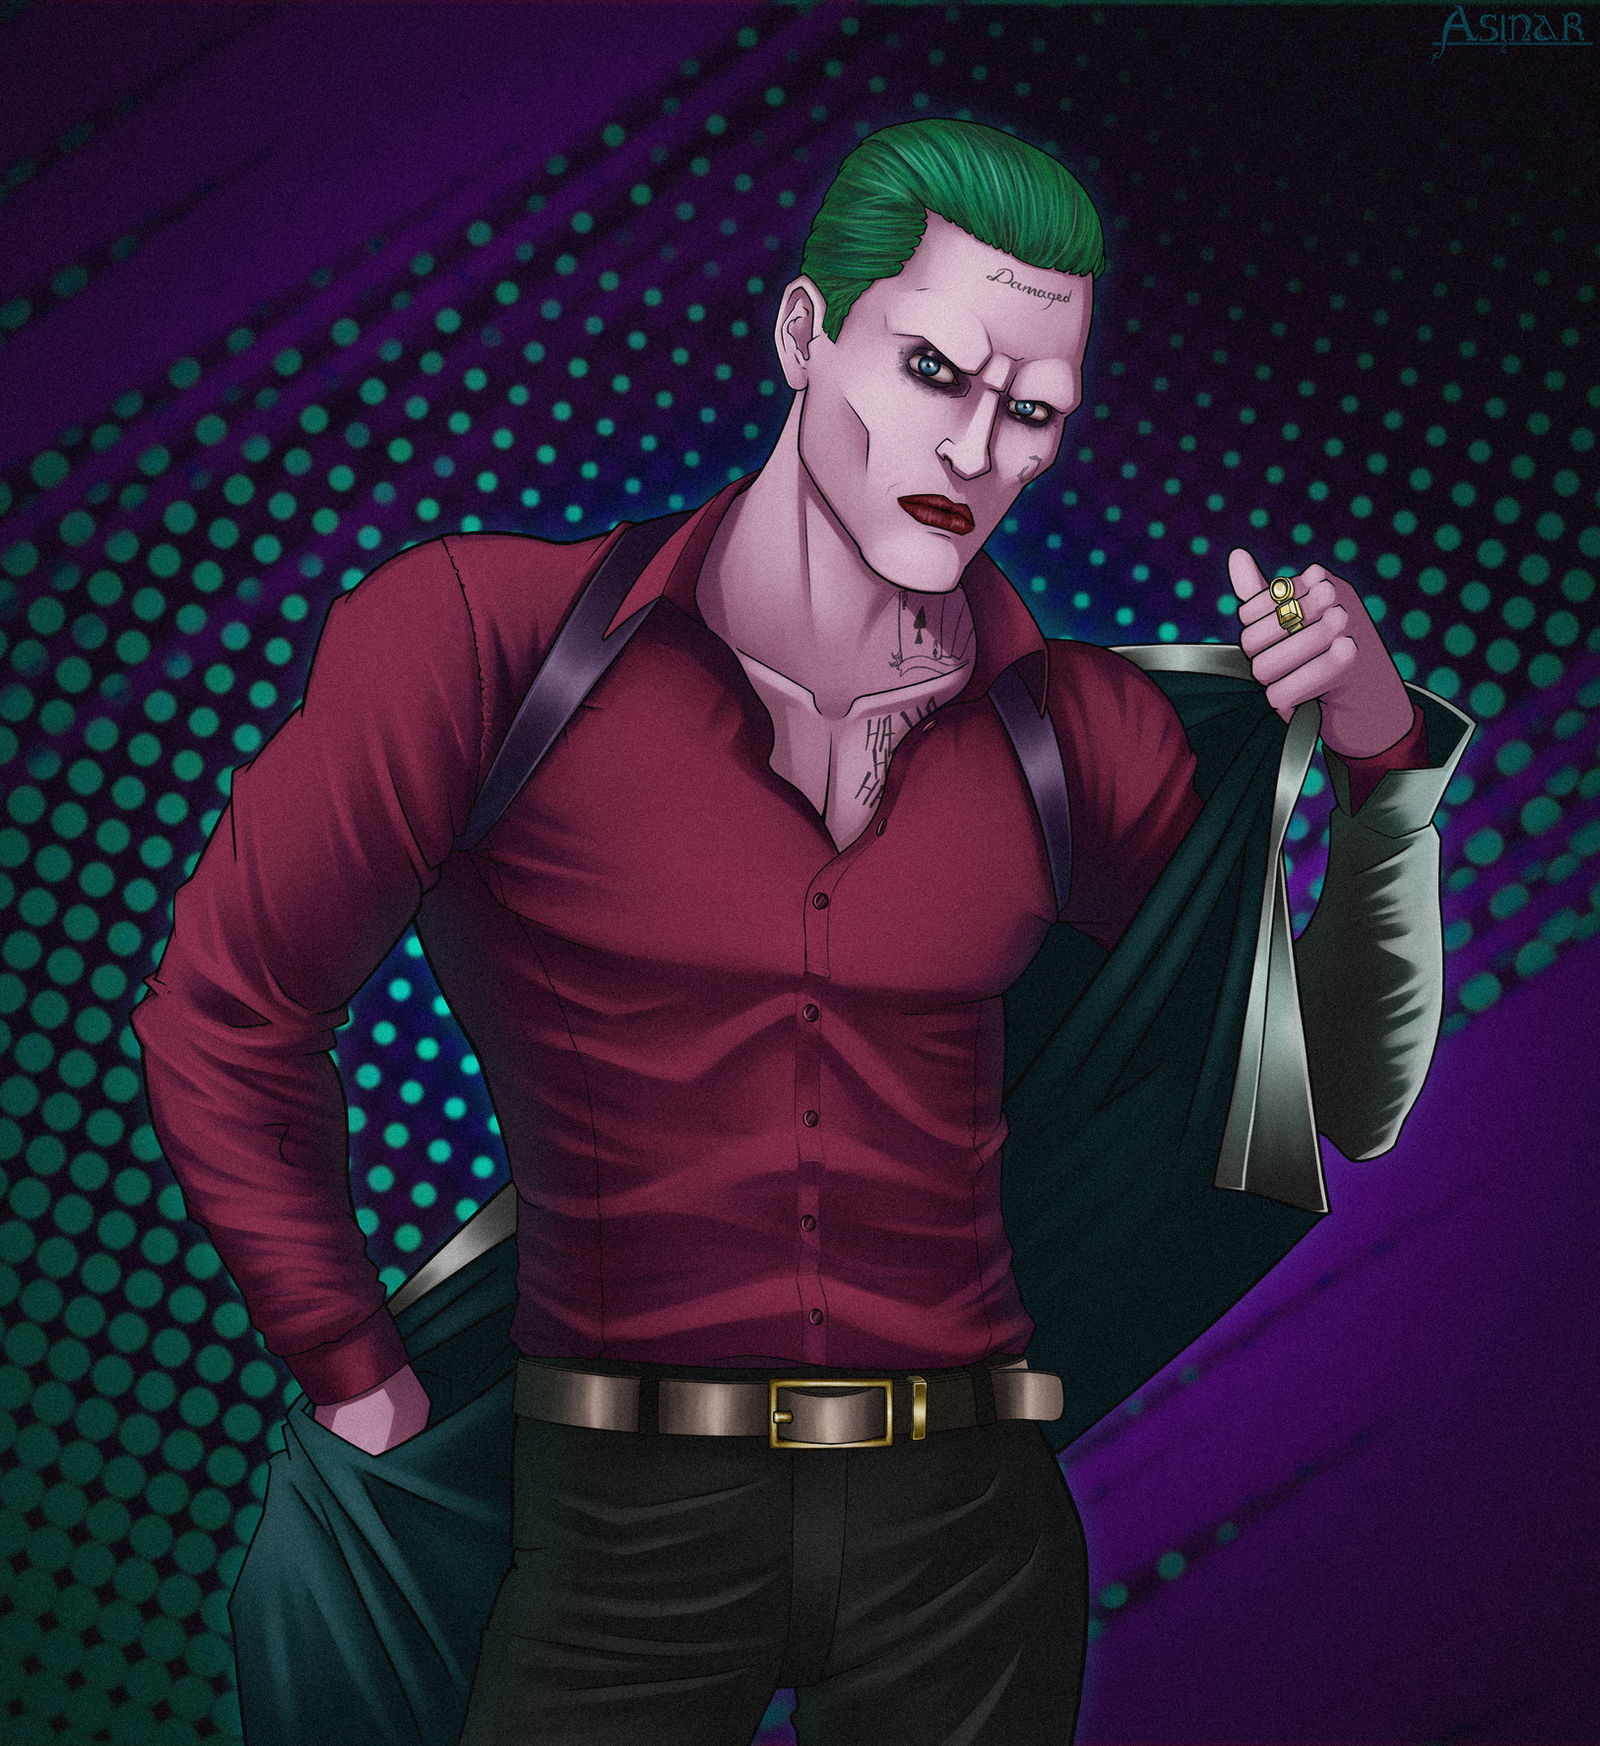 Suicide Squad Joker Metal Bookmark – Diligent Visual